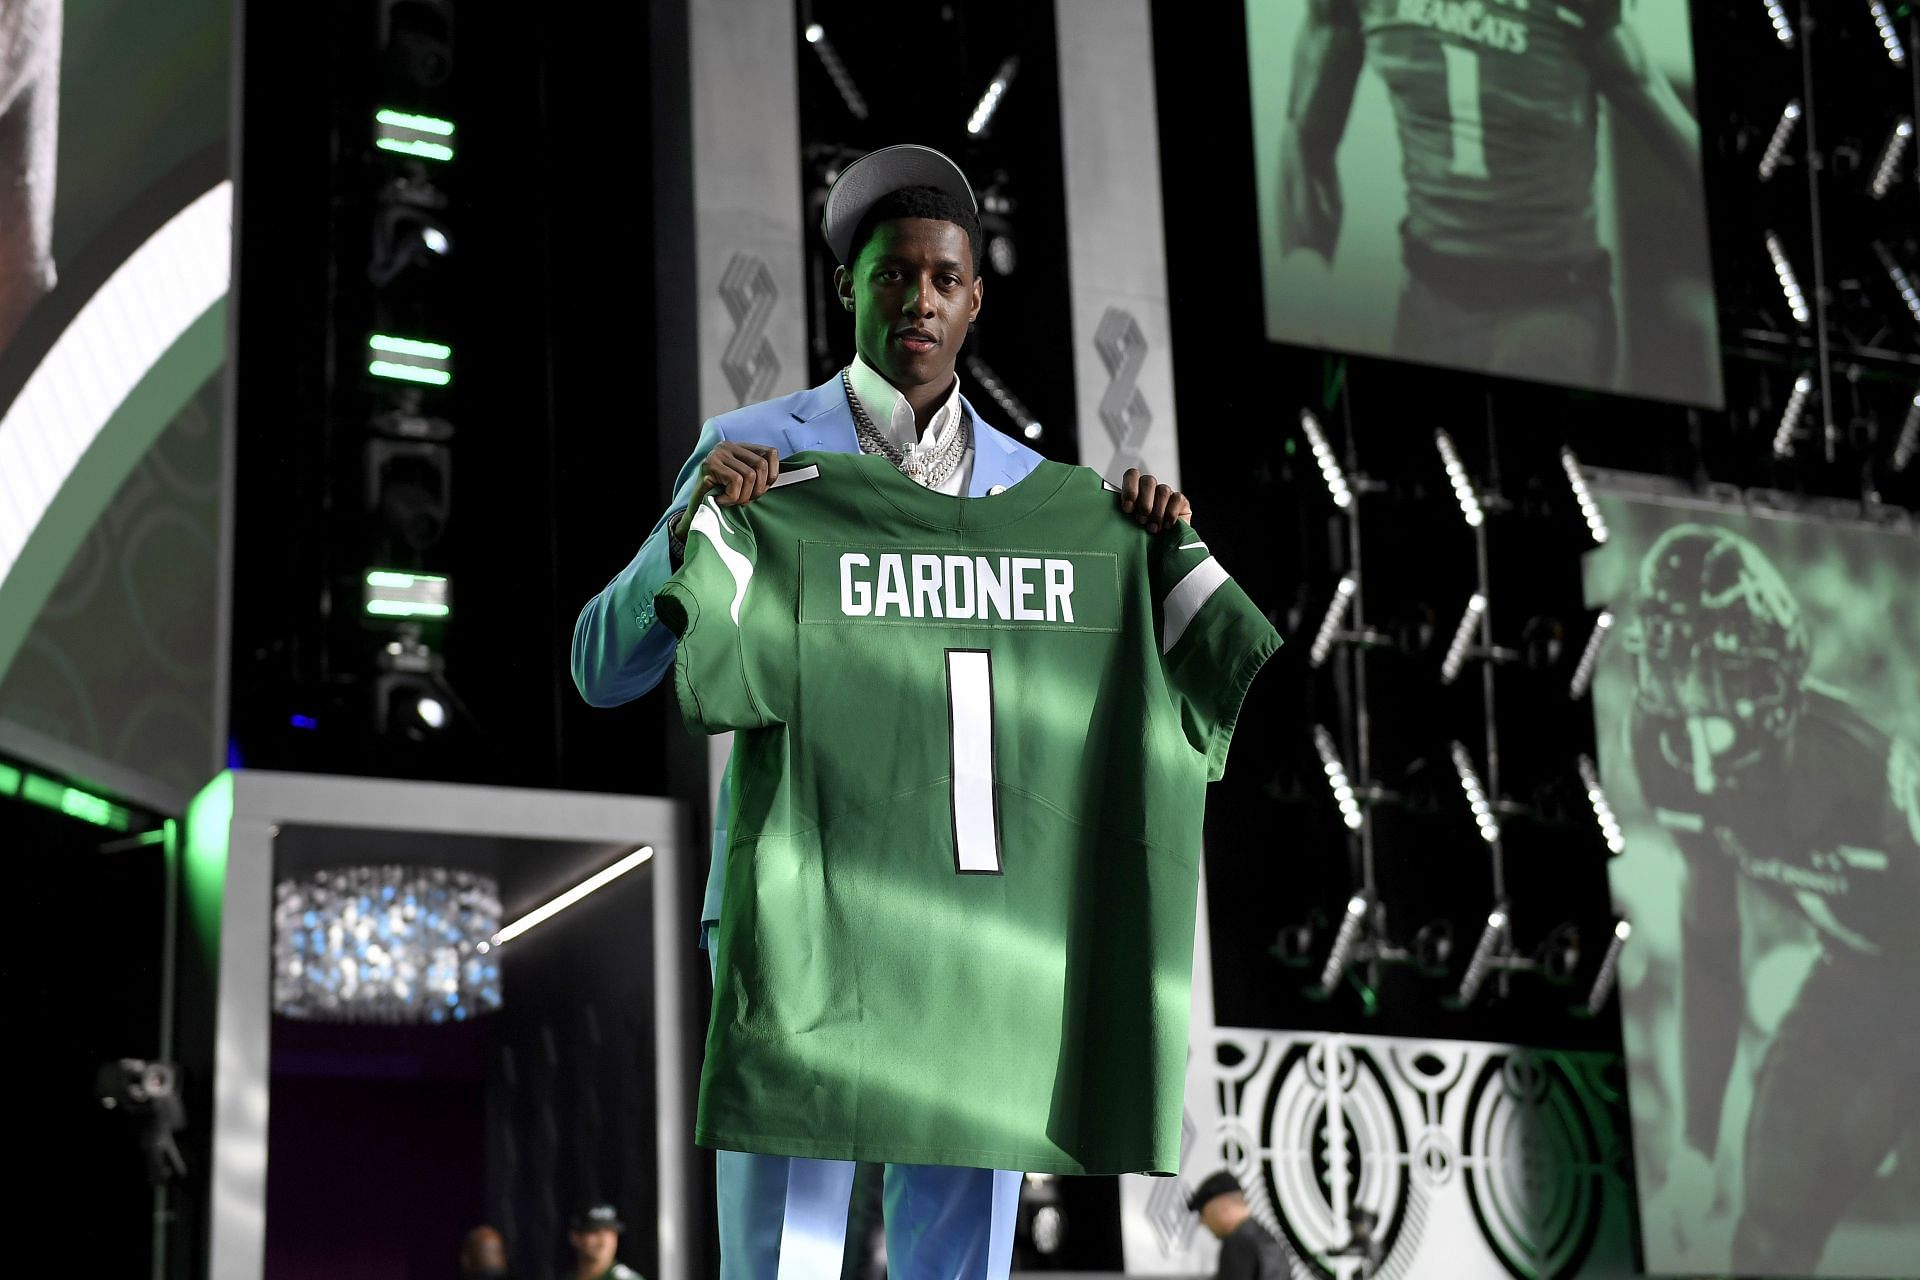 Sauce Gardner 2022 NFL Draft - Round 1